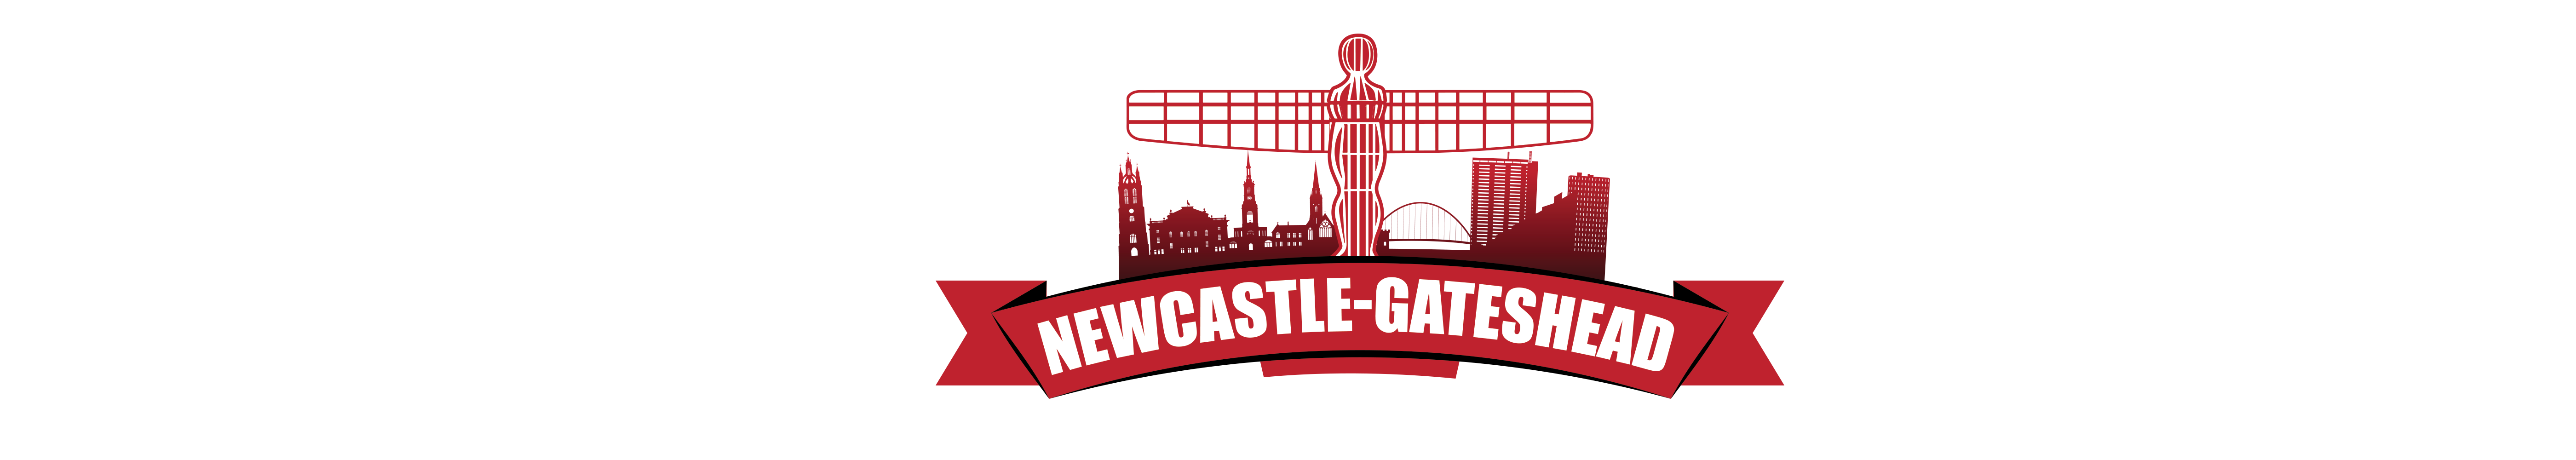 Newcastle-Gateshead Marathon | North East Running Event